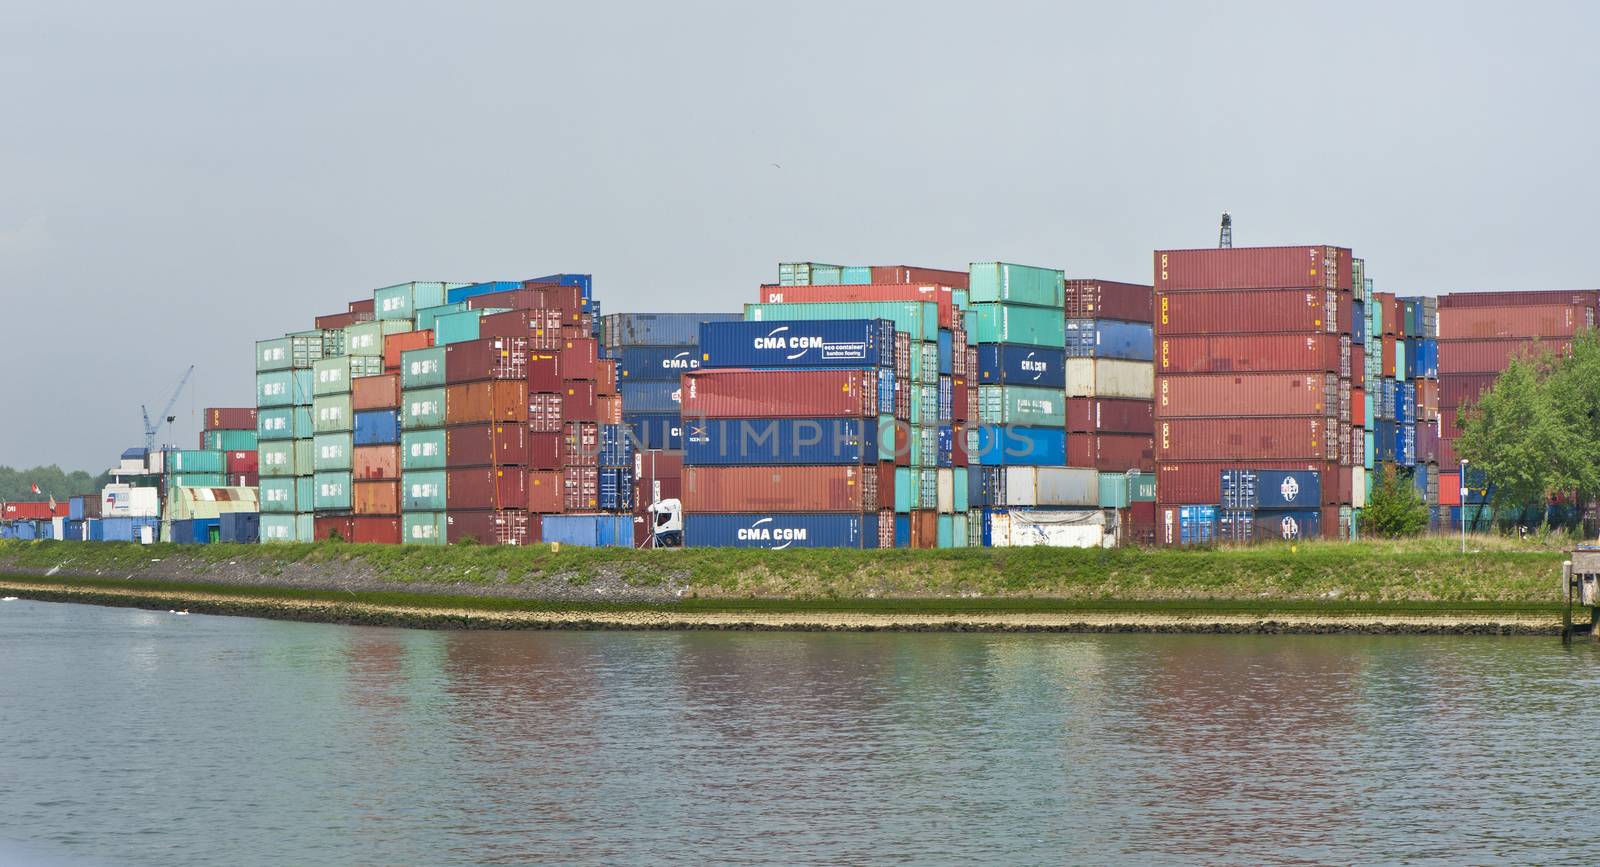 Rotterdam Port by Yorgy67